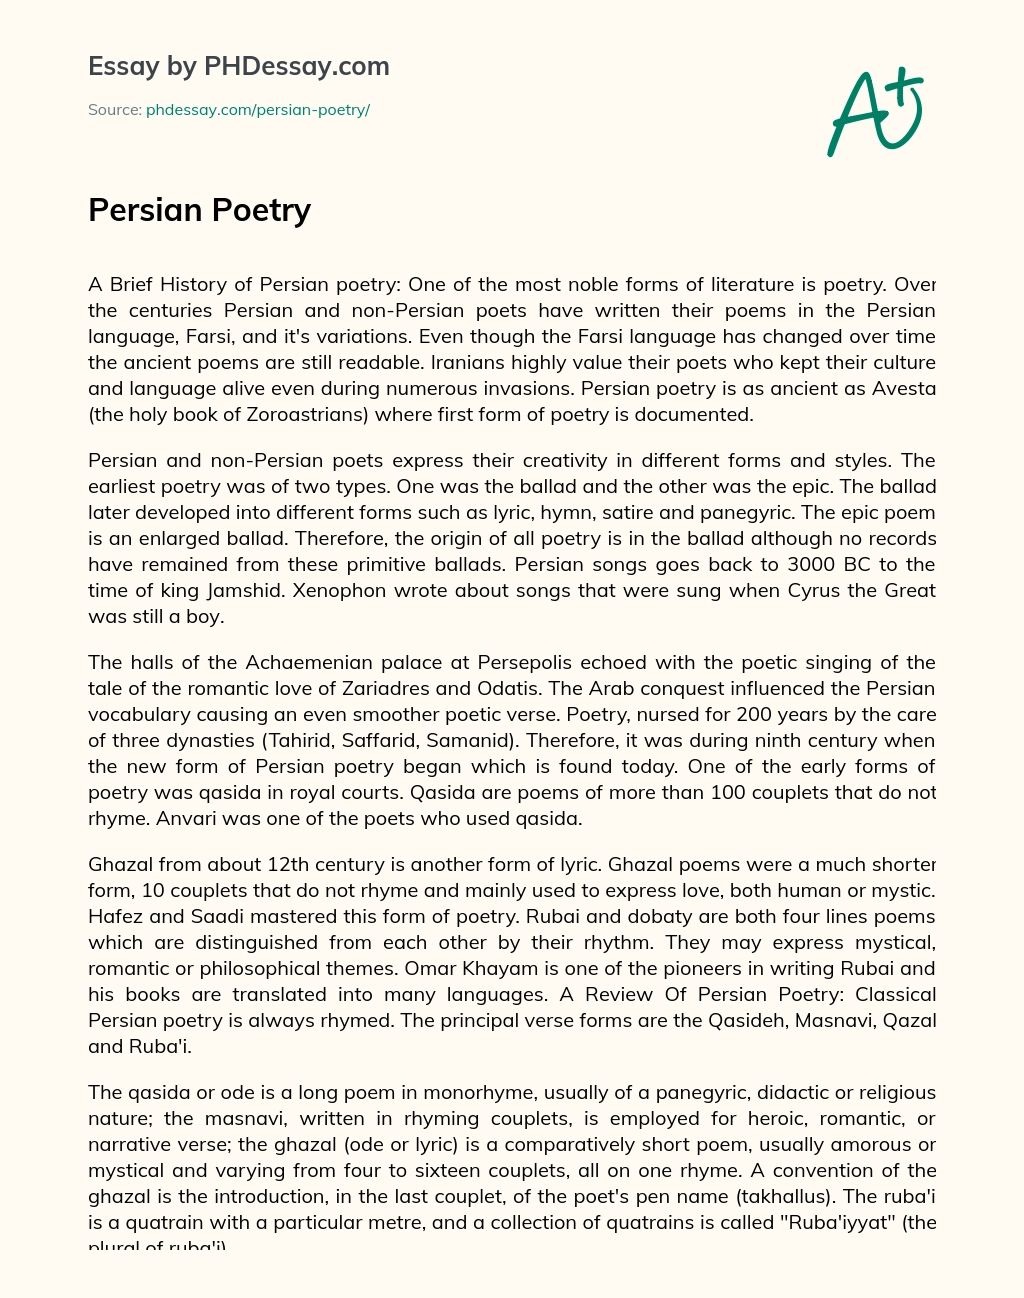 Persian Poetry essay